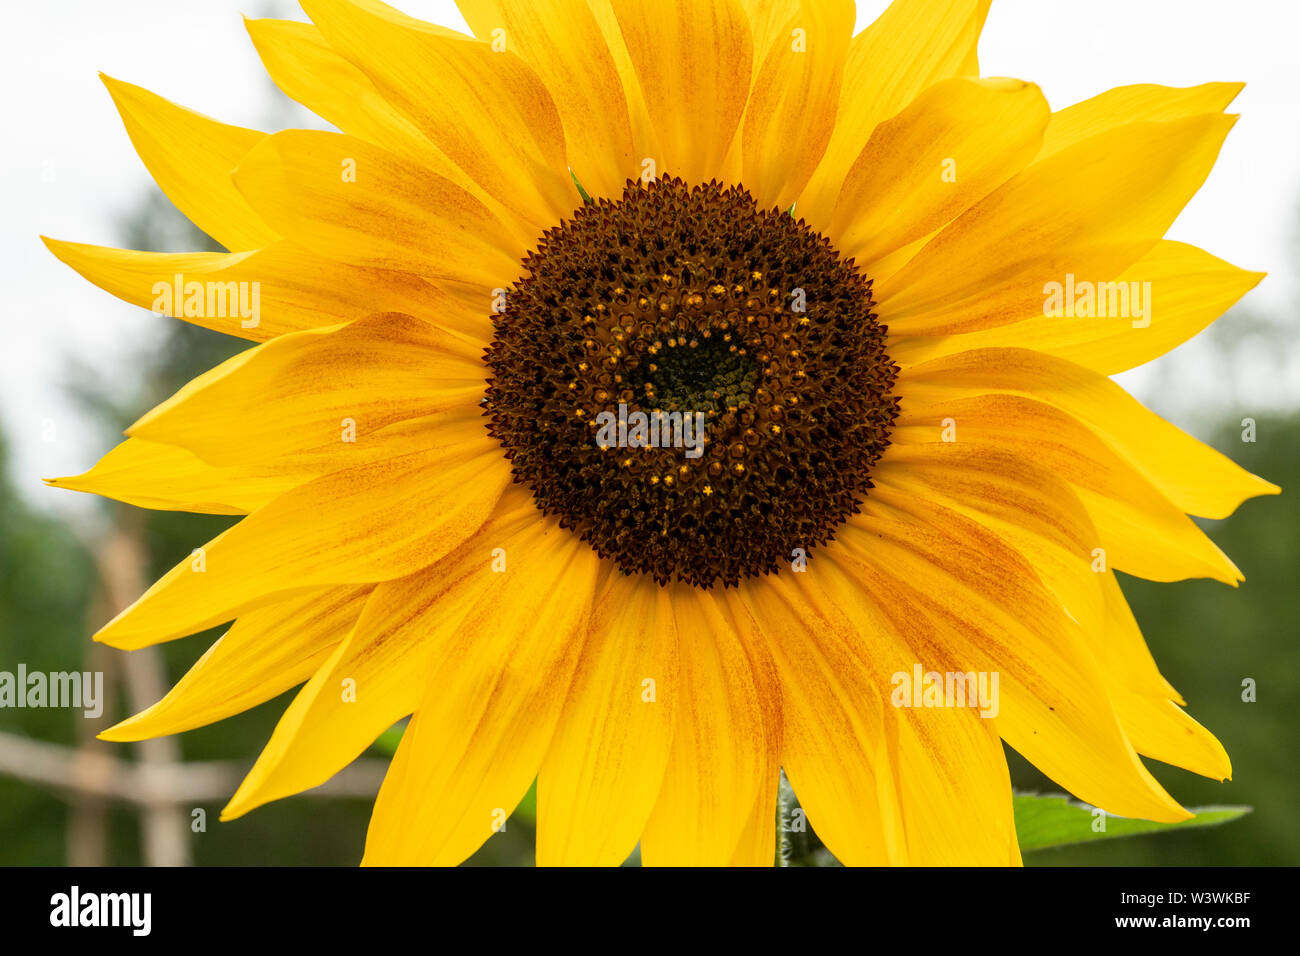 Close up shot of a yellow sunflower in a backyard vegetable garden. Stock Photo